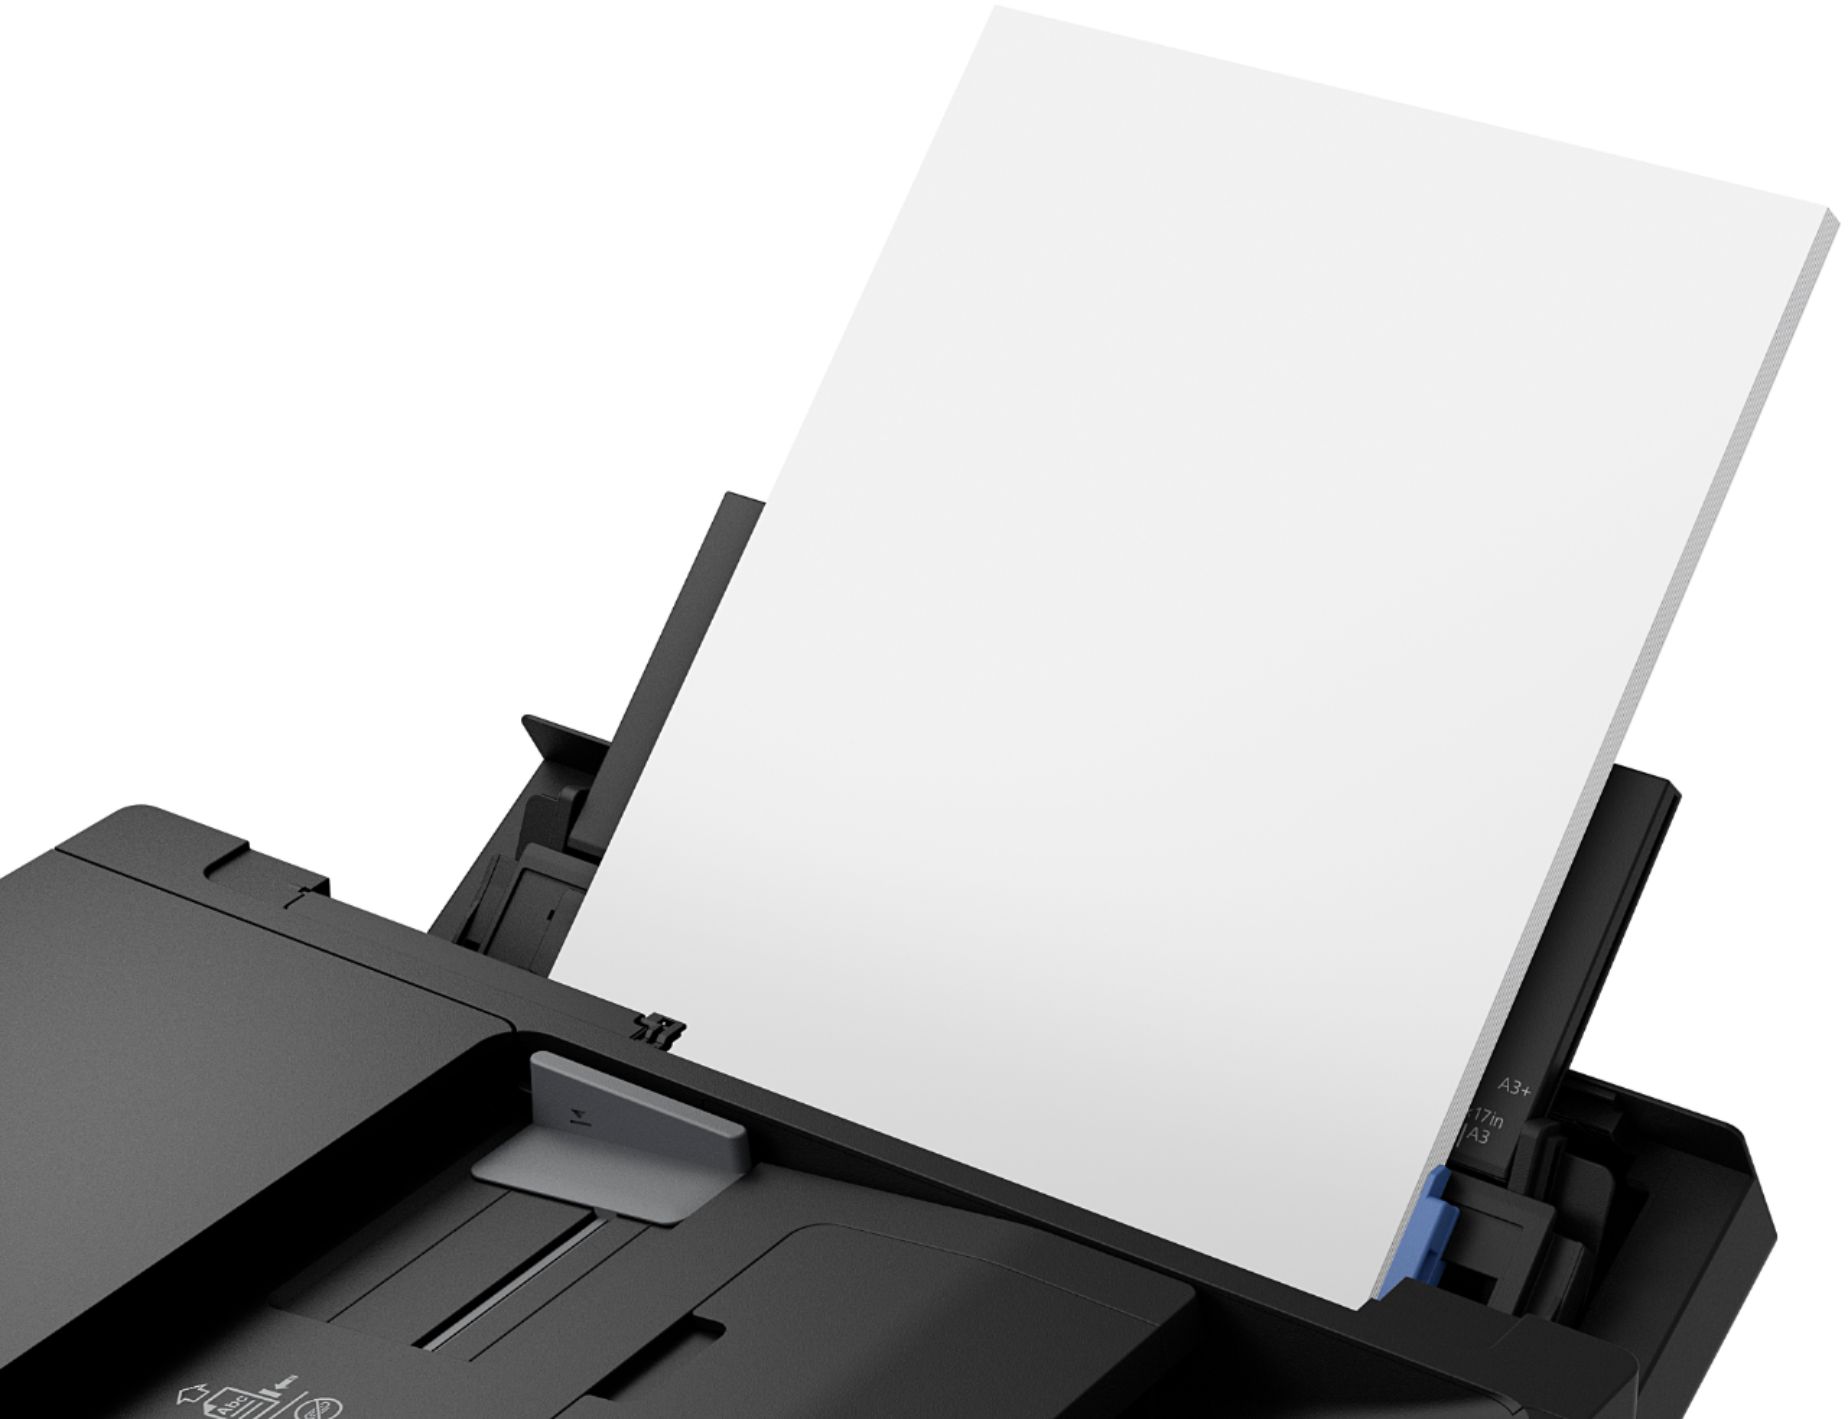 Epson WorkForce Pro WF-7840 Wireless All-in-One Printer C11CH67201 - Buy